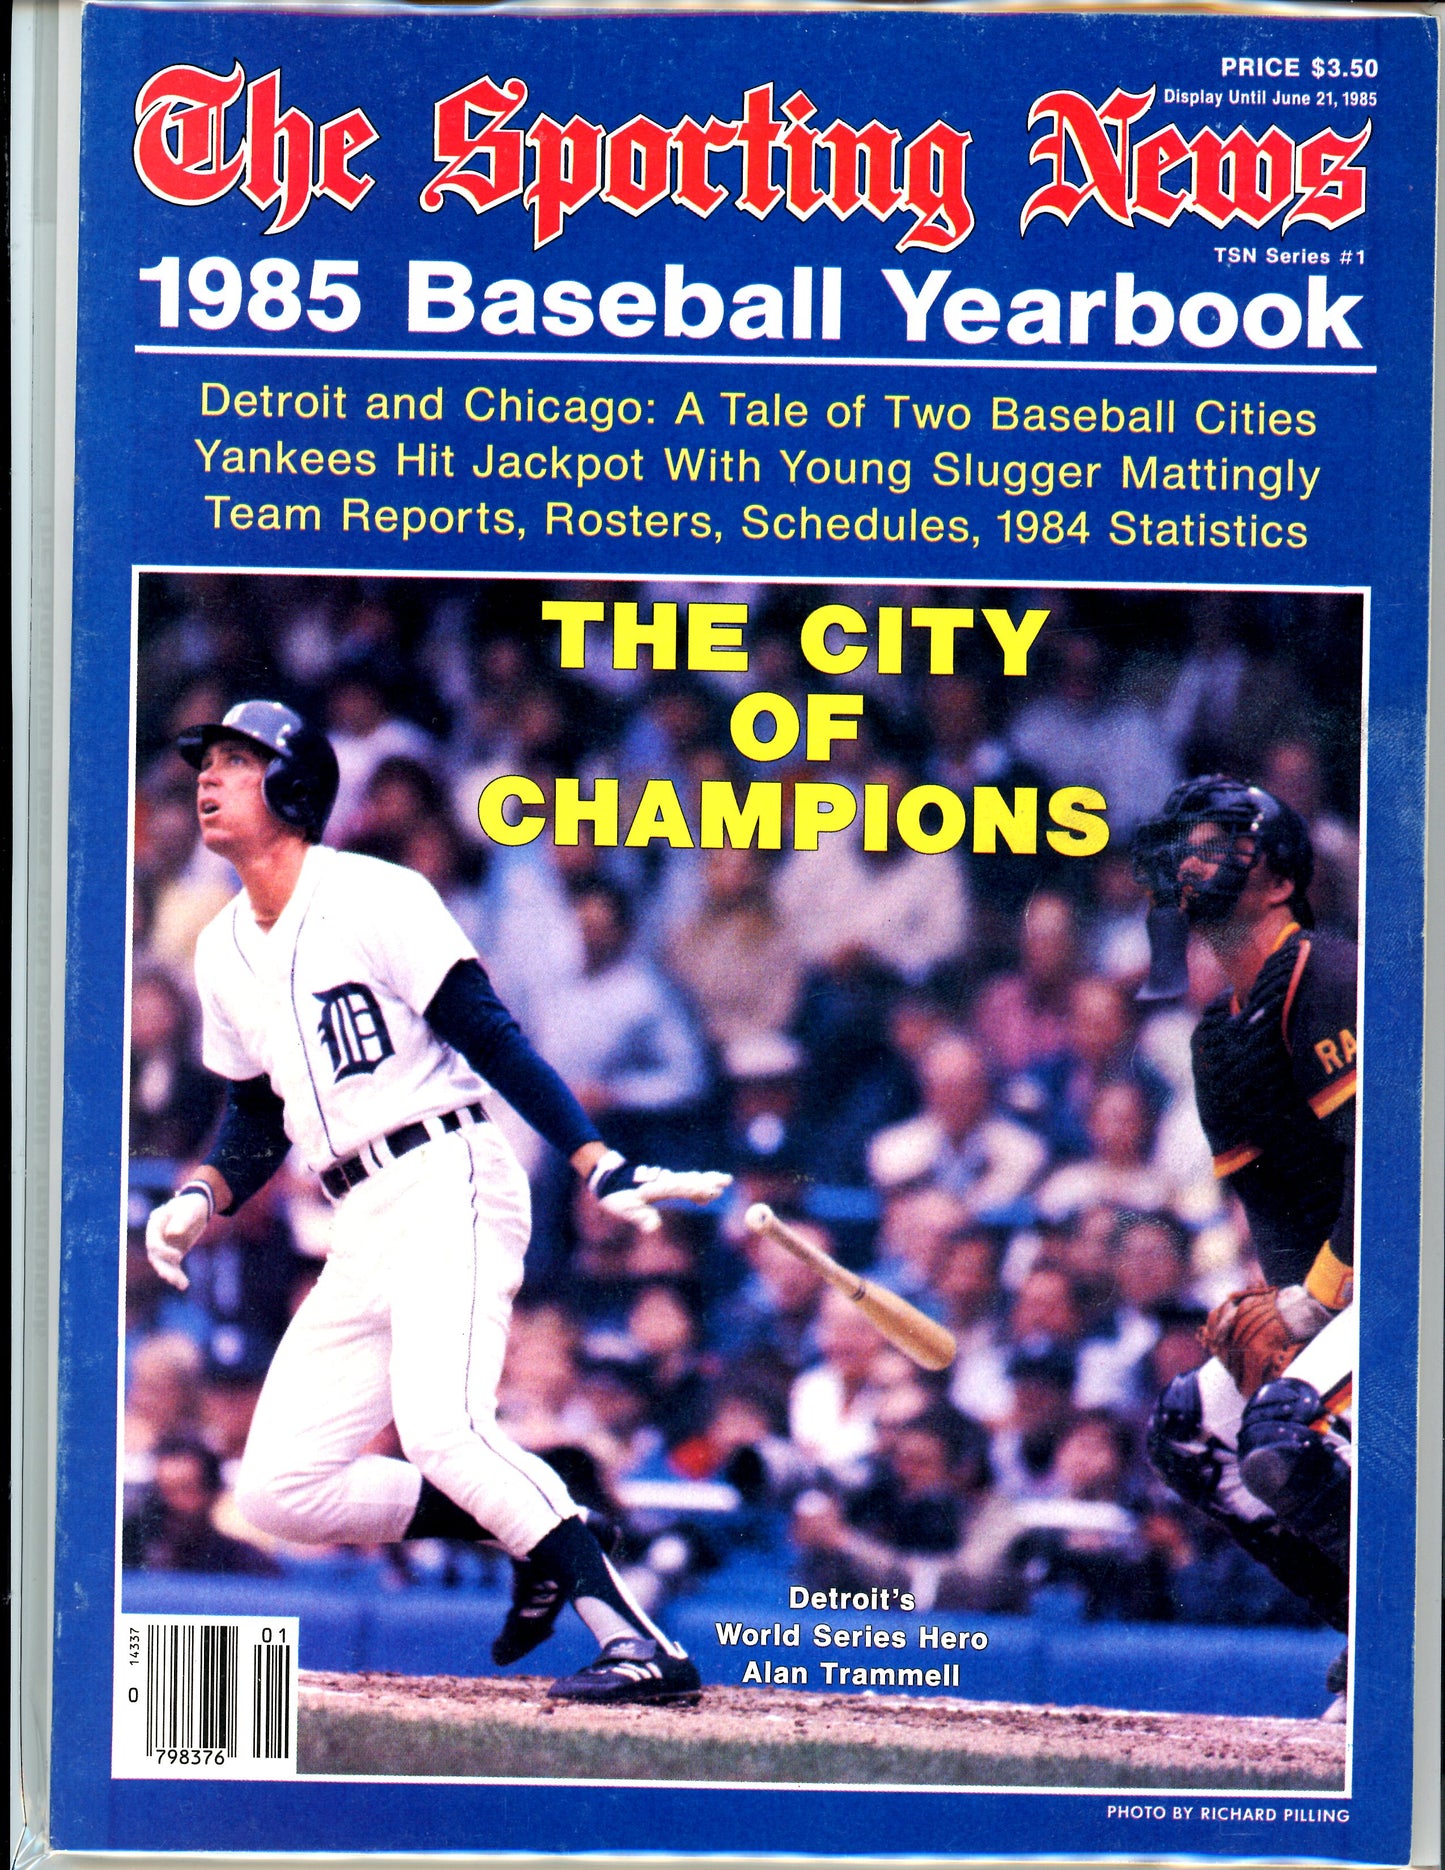 Sporting News (1985 MLB Yearbook) Vintage Magazine Detroit Tigers World Series, Alan Trammell